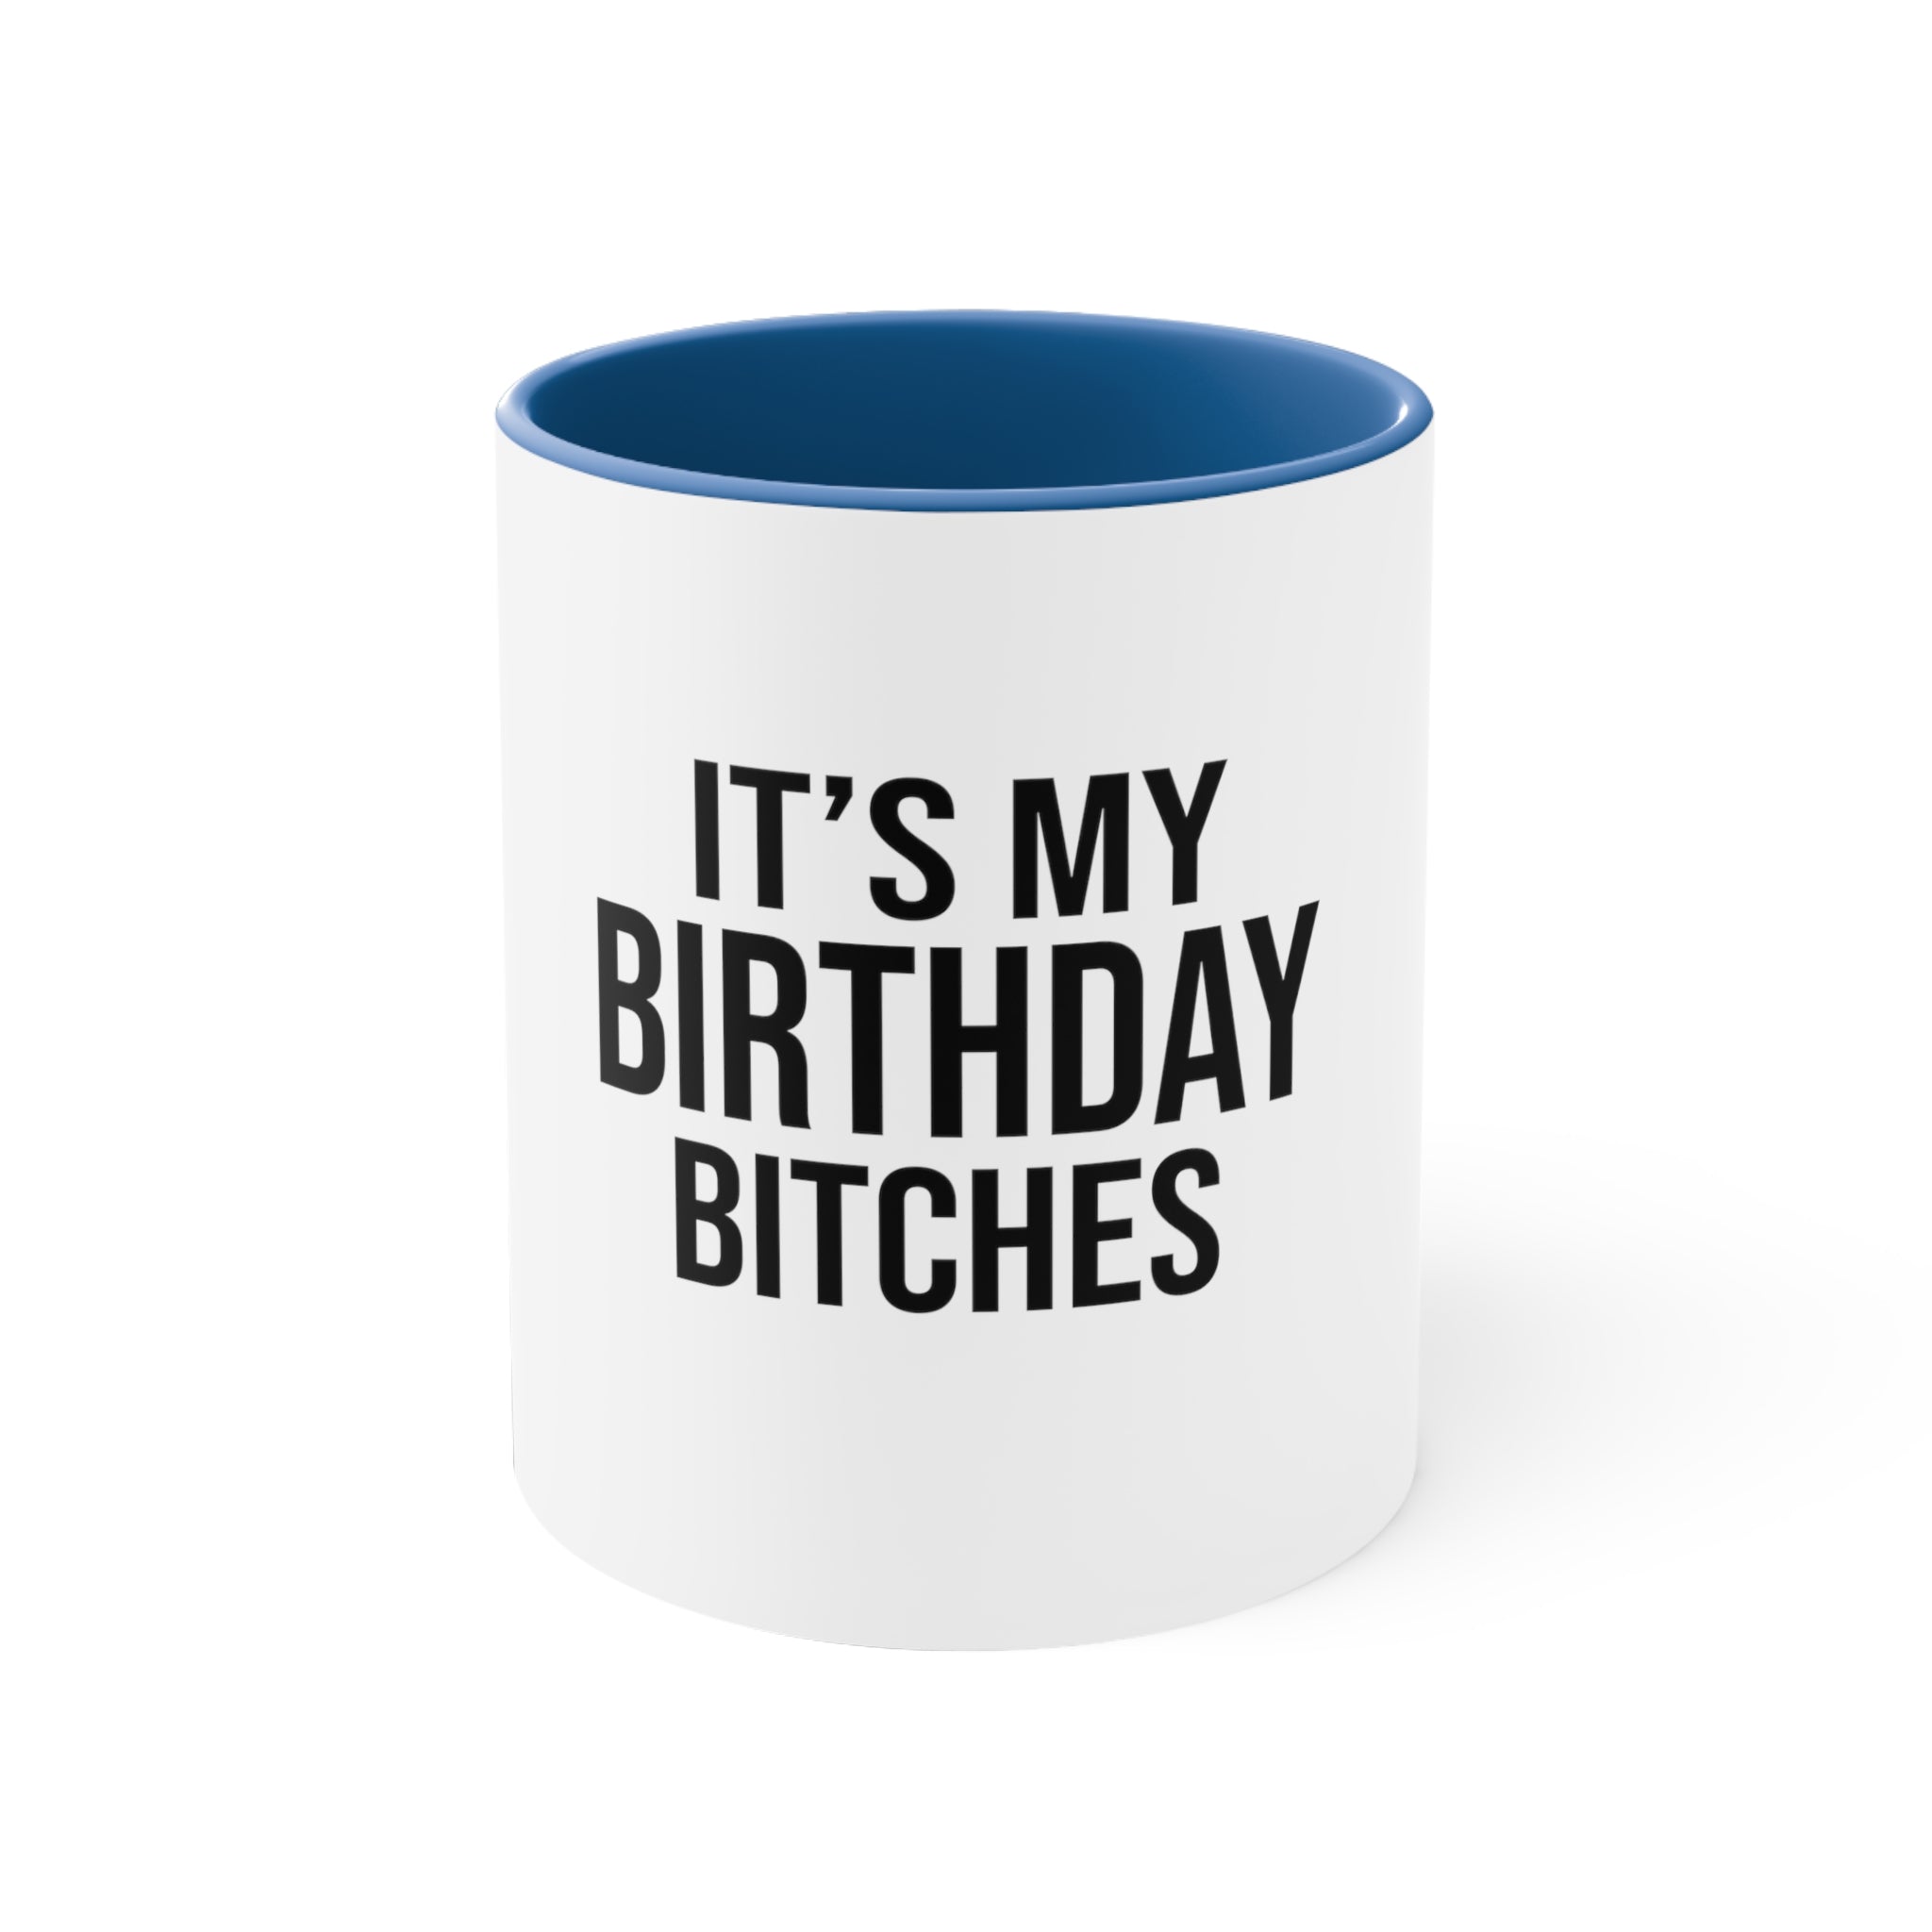 It's My Birthday Bitches Accent Coffee Mug, 11oz